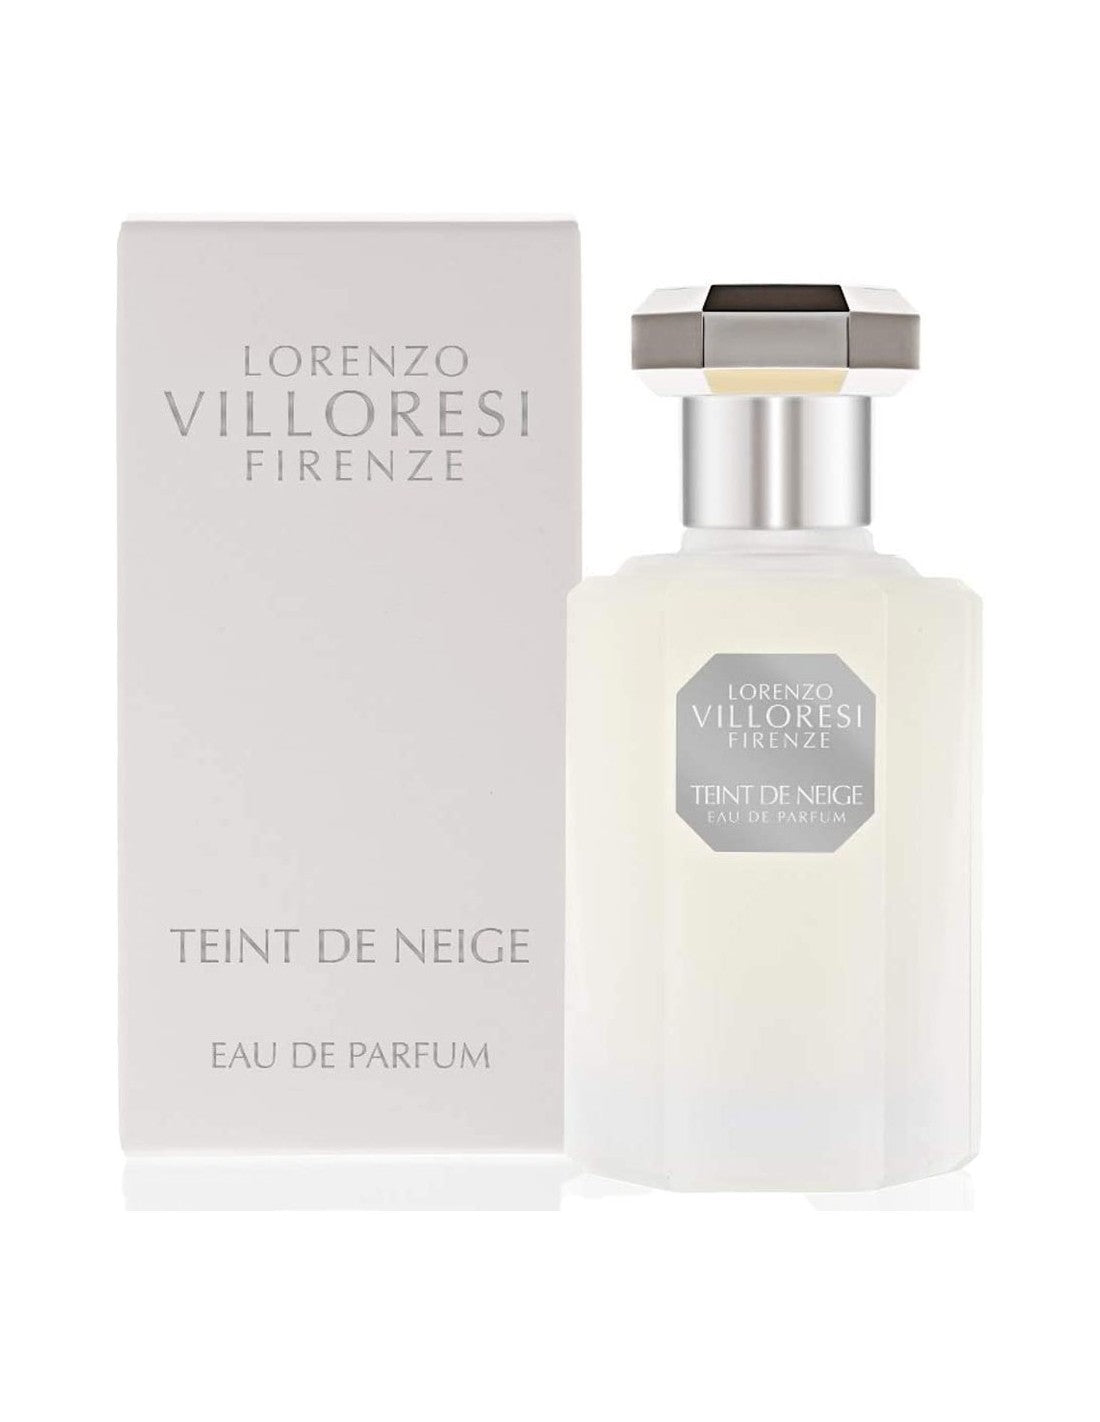 Lorenzo Villoresi Teint de Neige Eau de Parfum 50 e 100 ml | RossoLacca